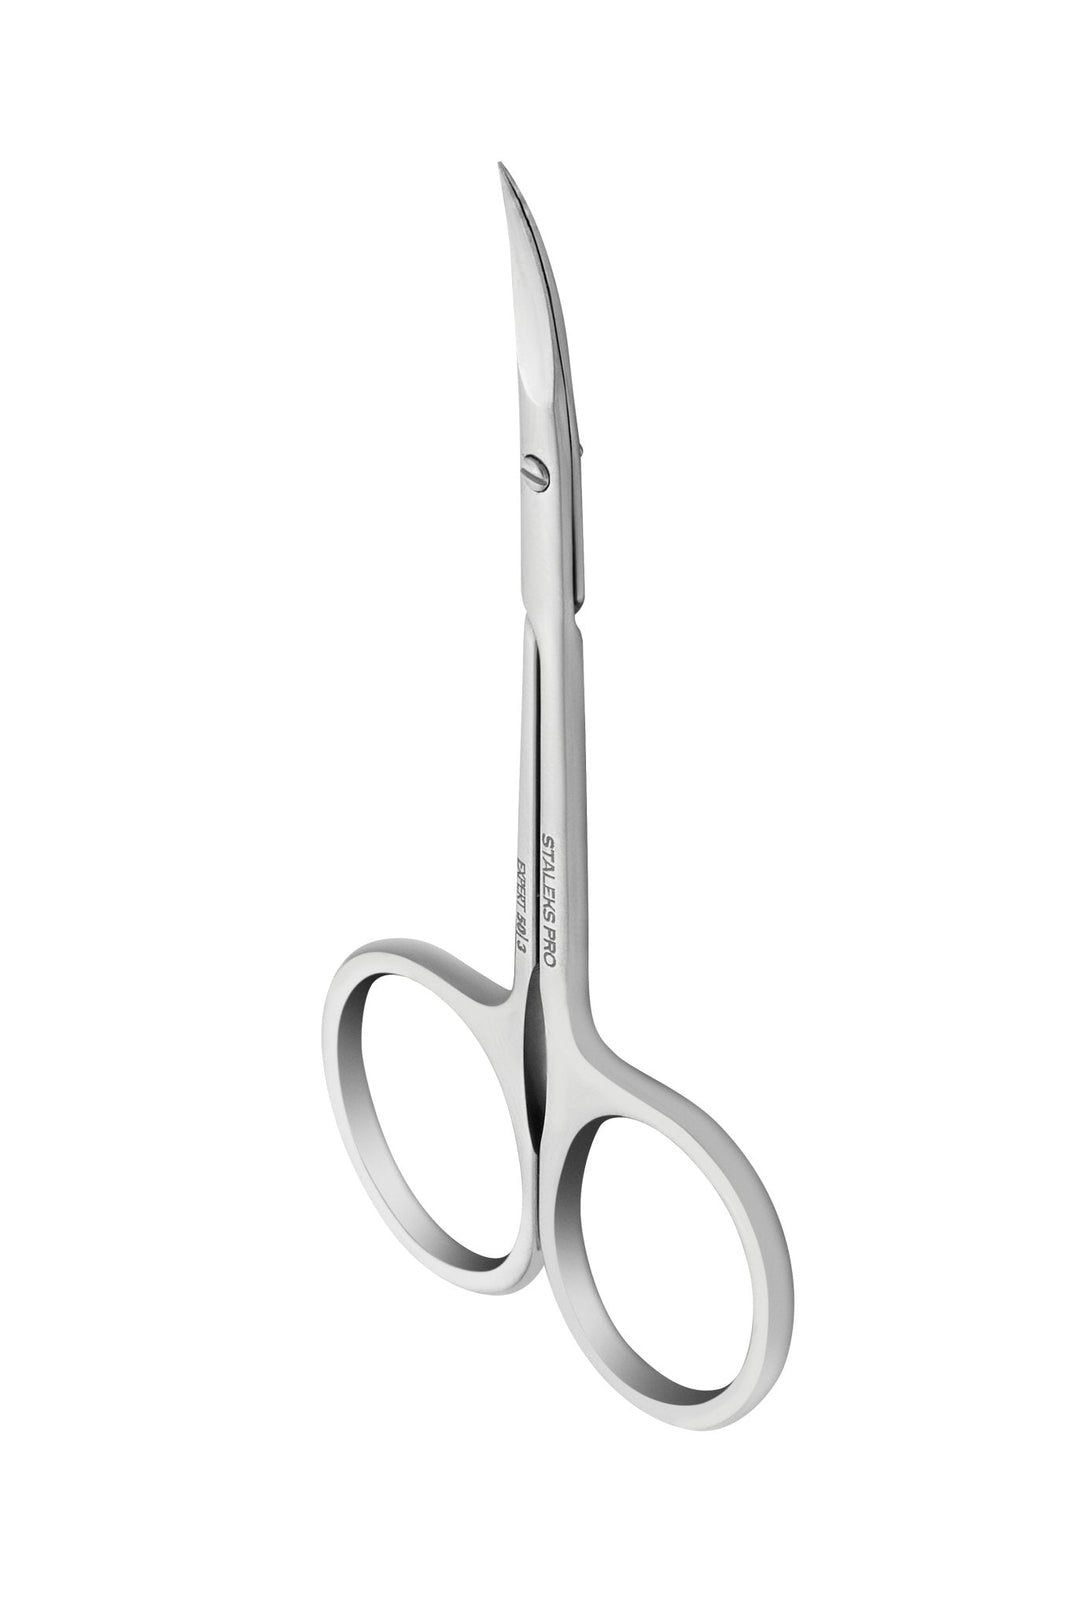 Staleks Pro Cuticle Scissors with Narrow Curved Blades Expert 50 Type 3 — 25 mm blades | U-tools